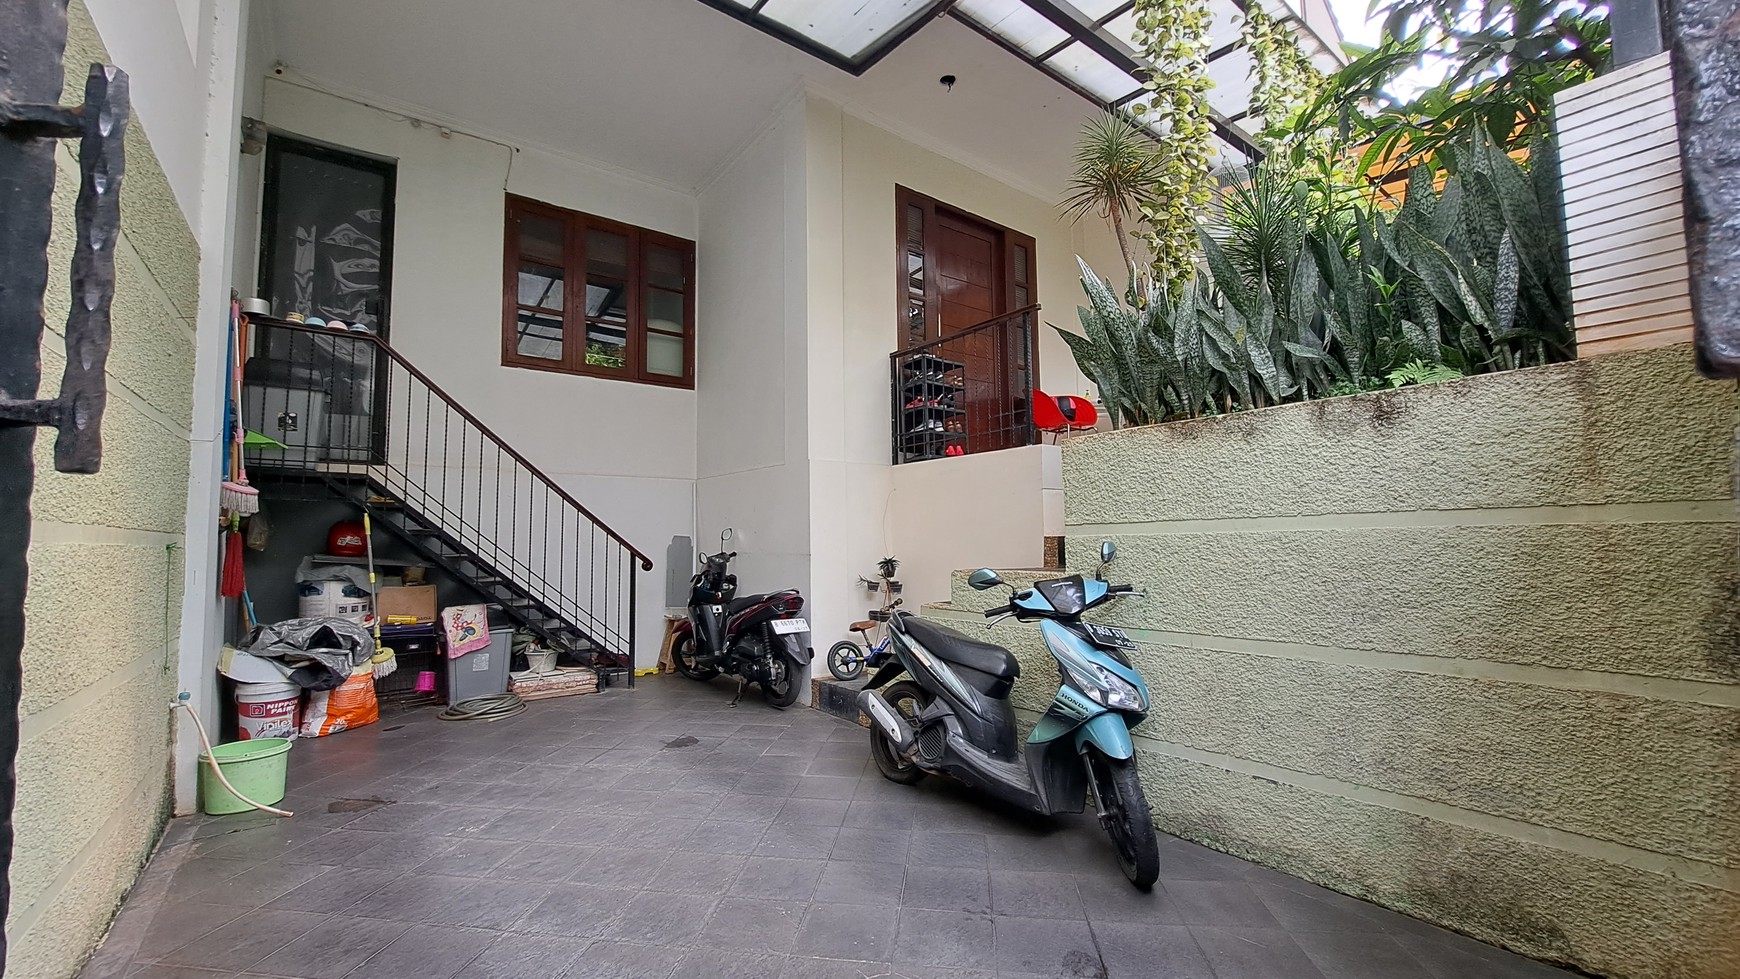 Rumah di daerah ekslusif Jagakarsa Jakarta Selatan